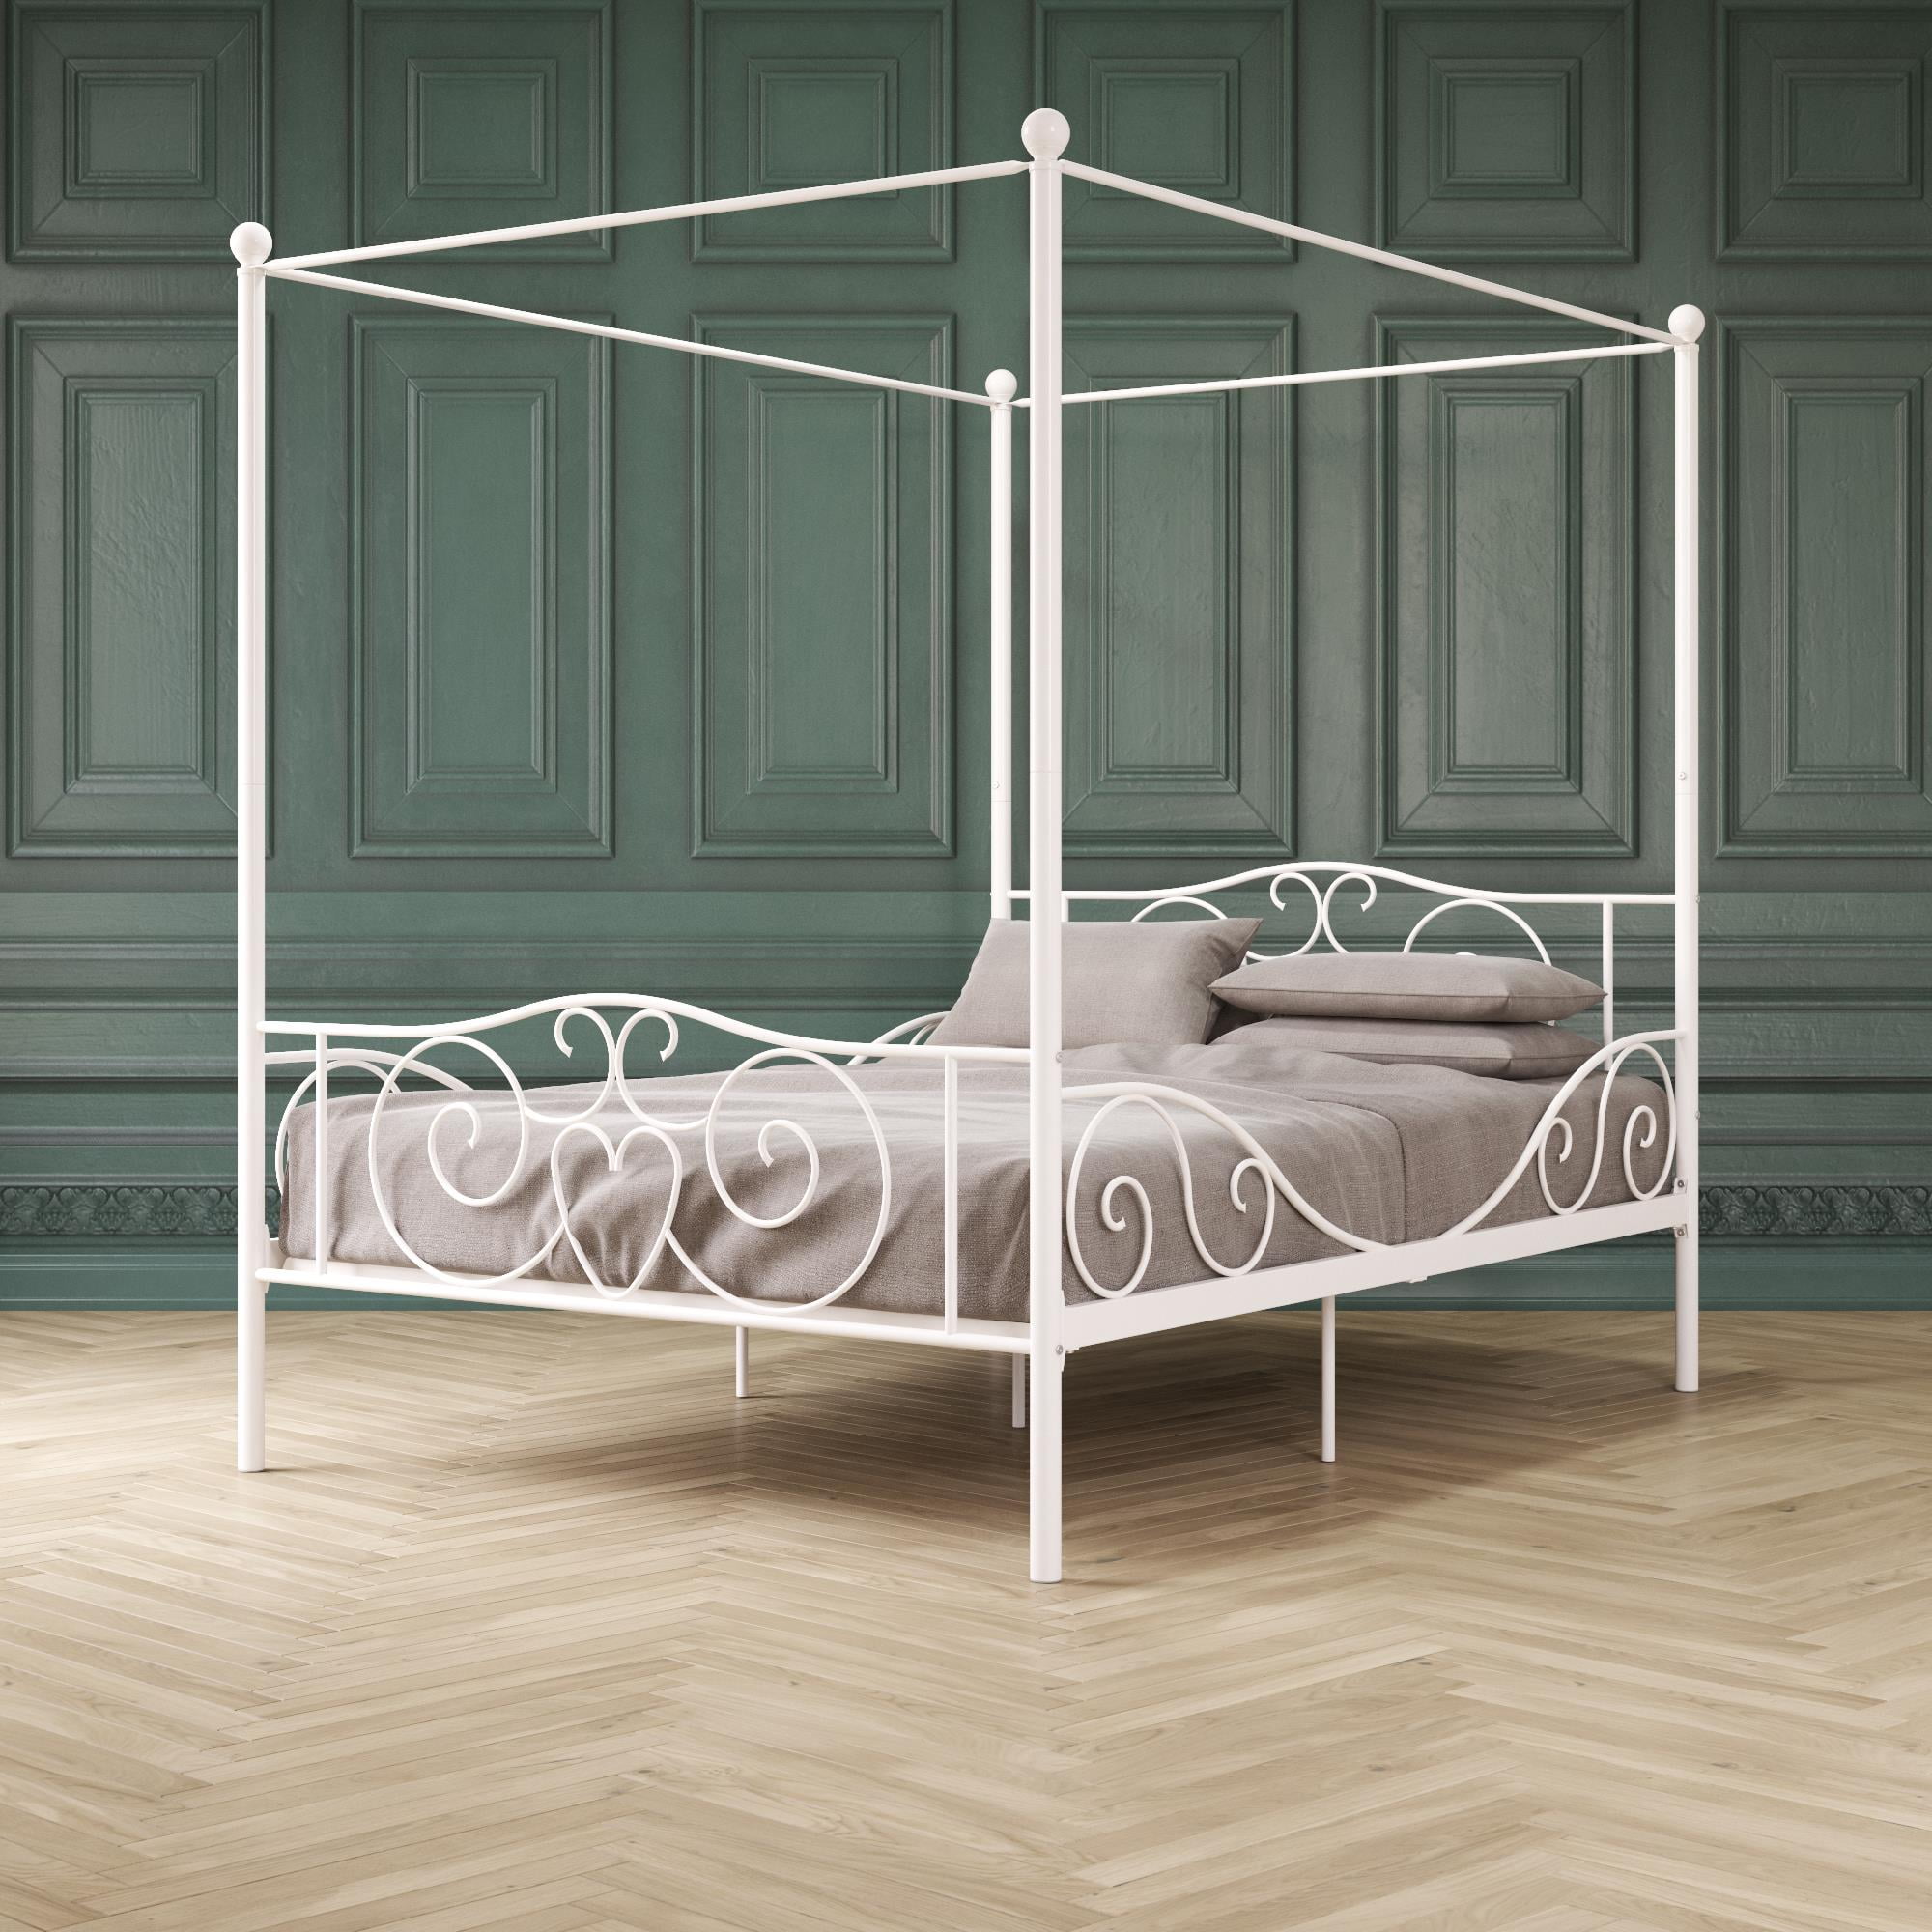 Elm Oak Canopy Metal Bed Full Size, White Full Size Canopy Bed Frame